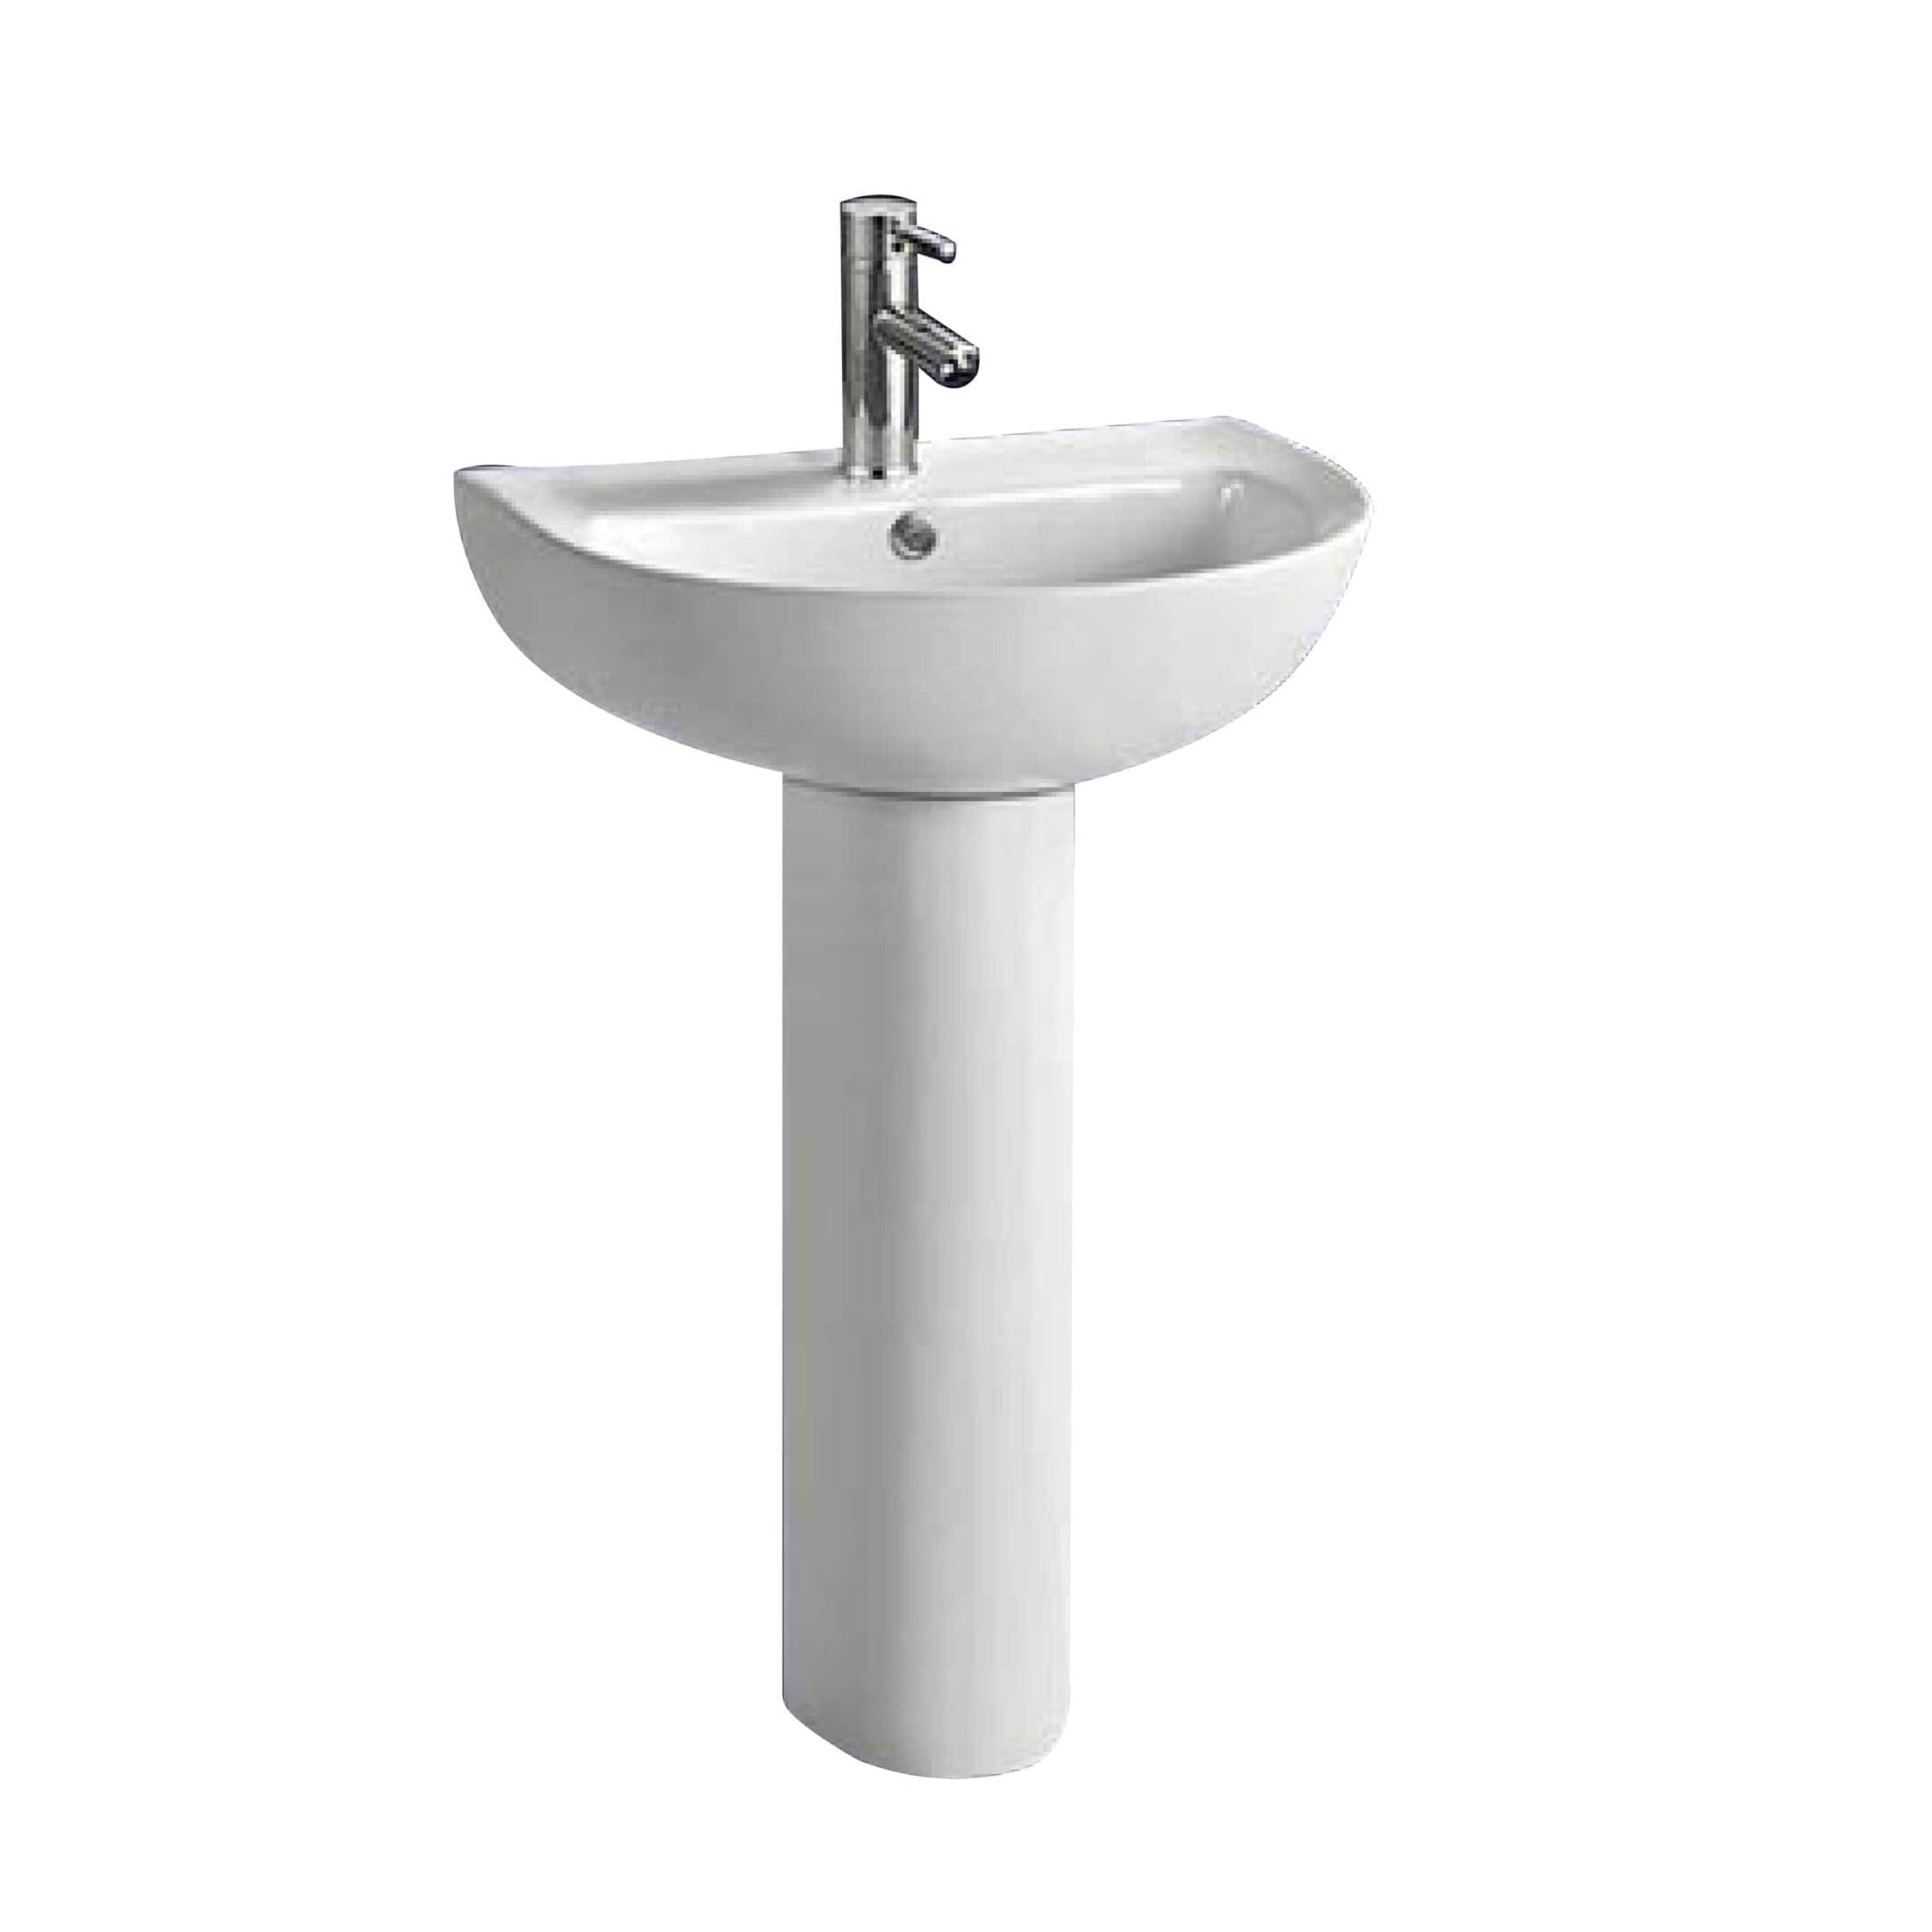 Full Pedestal Hand Wash Basin 550 x 430 x 845mm - B203 | Supply Master | Accra, Ghana Bathroom Sink Buy Tools hardware Building materials